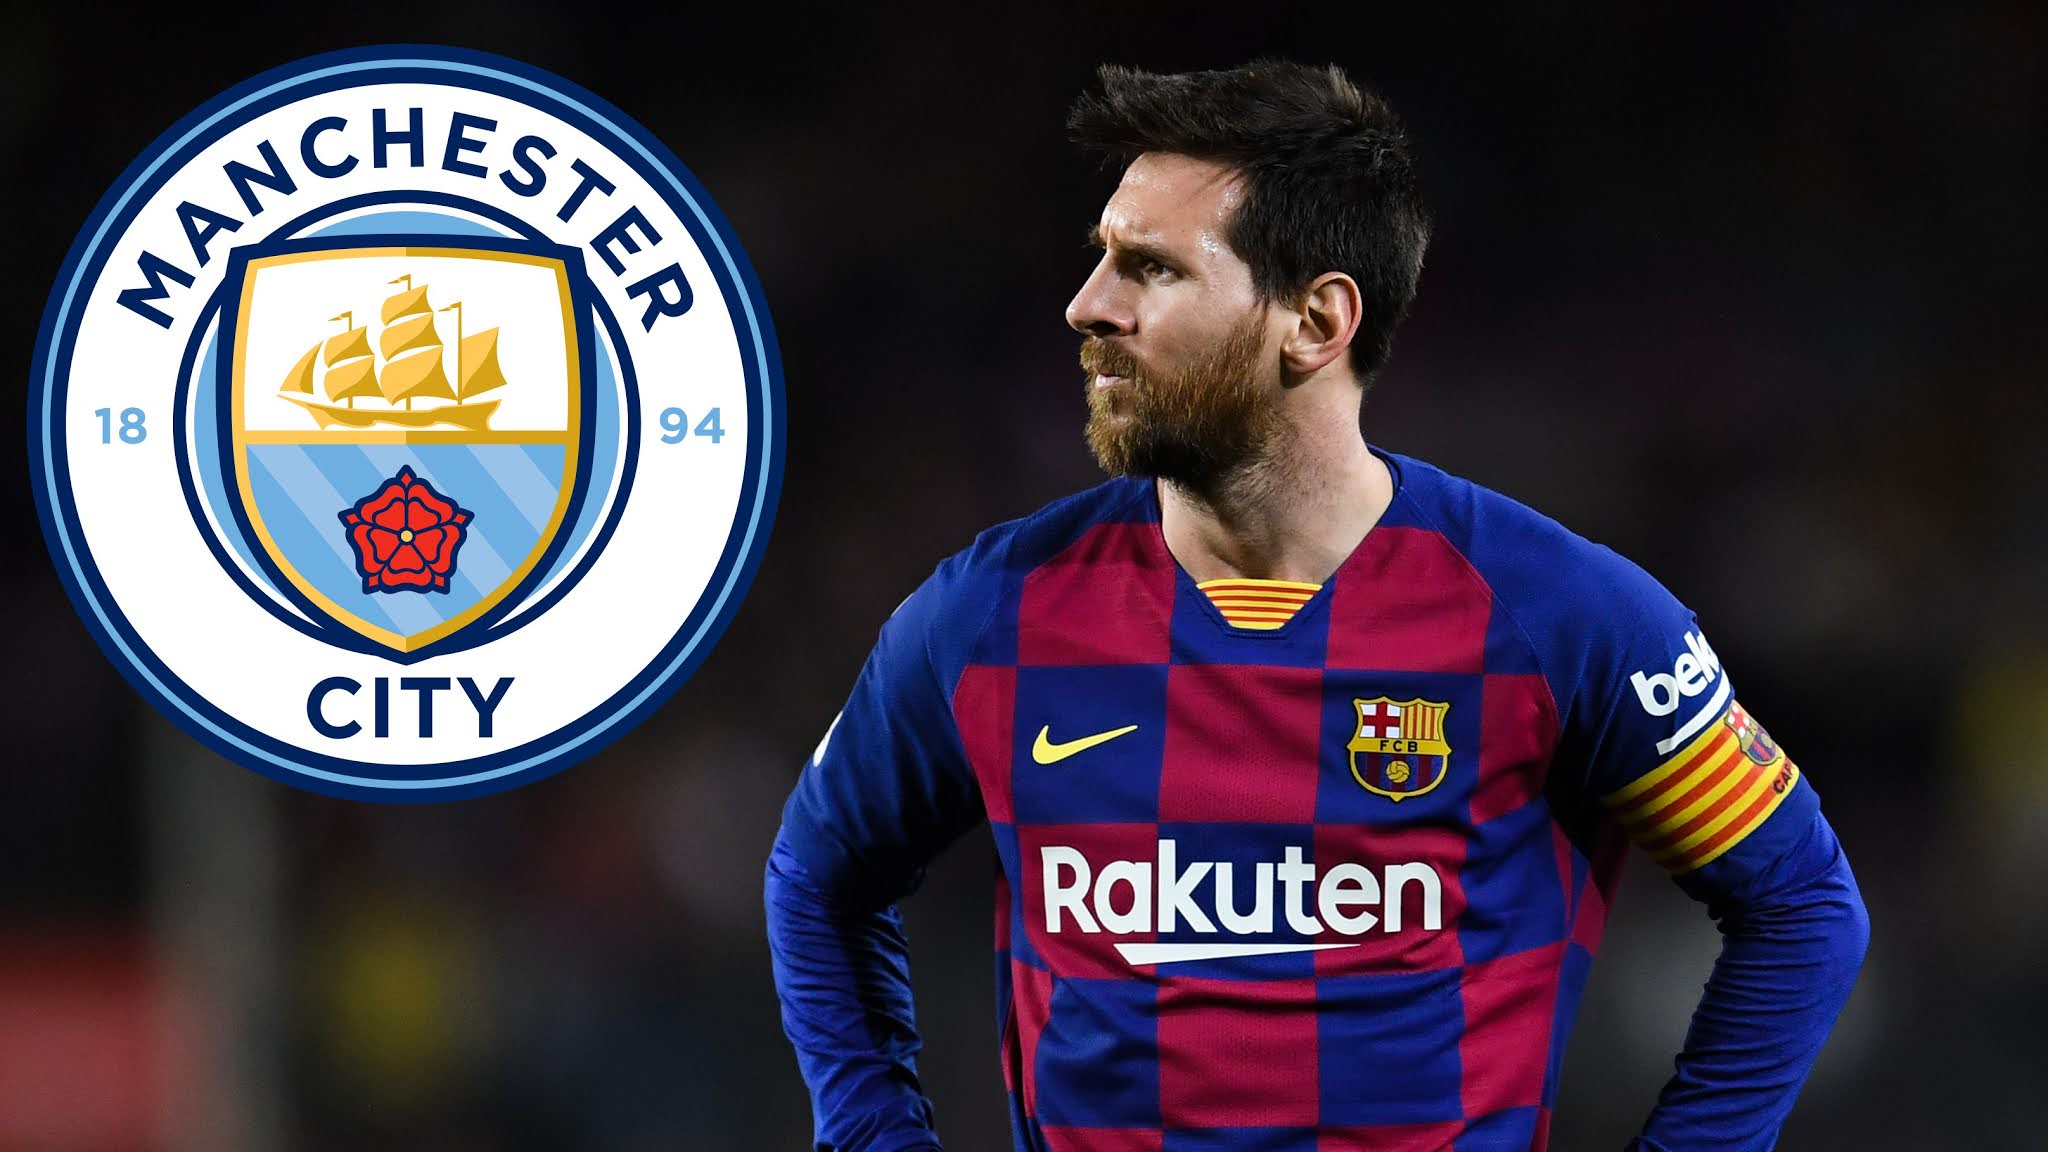 LaLiga backs Barca, says Messi’s Barcelona contract still valid